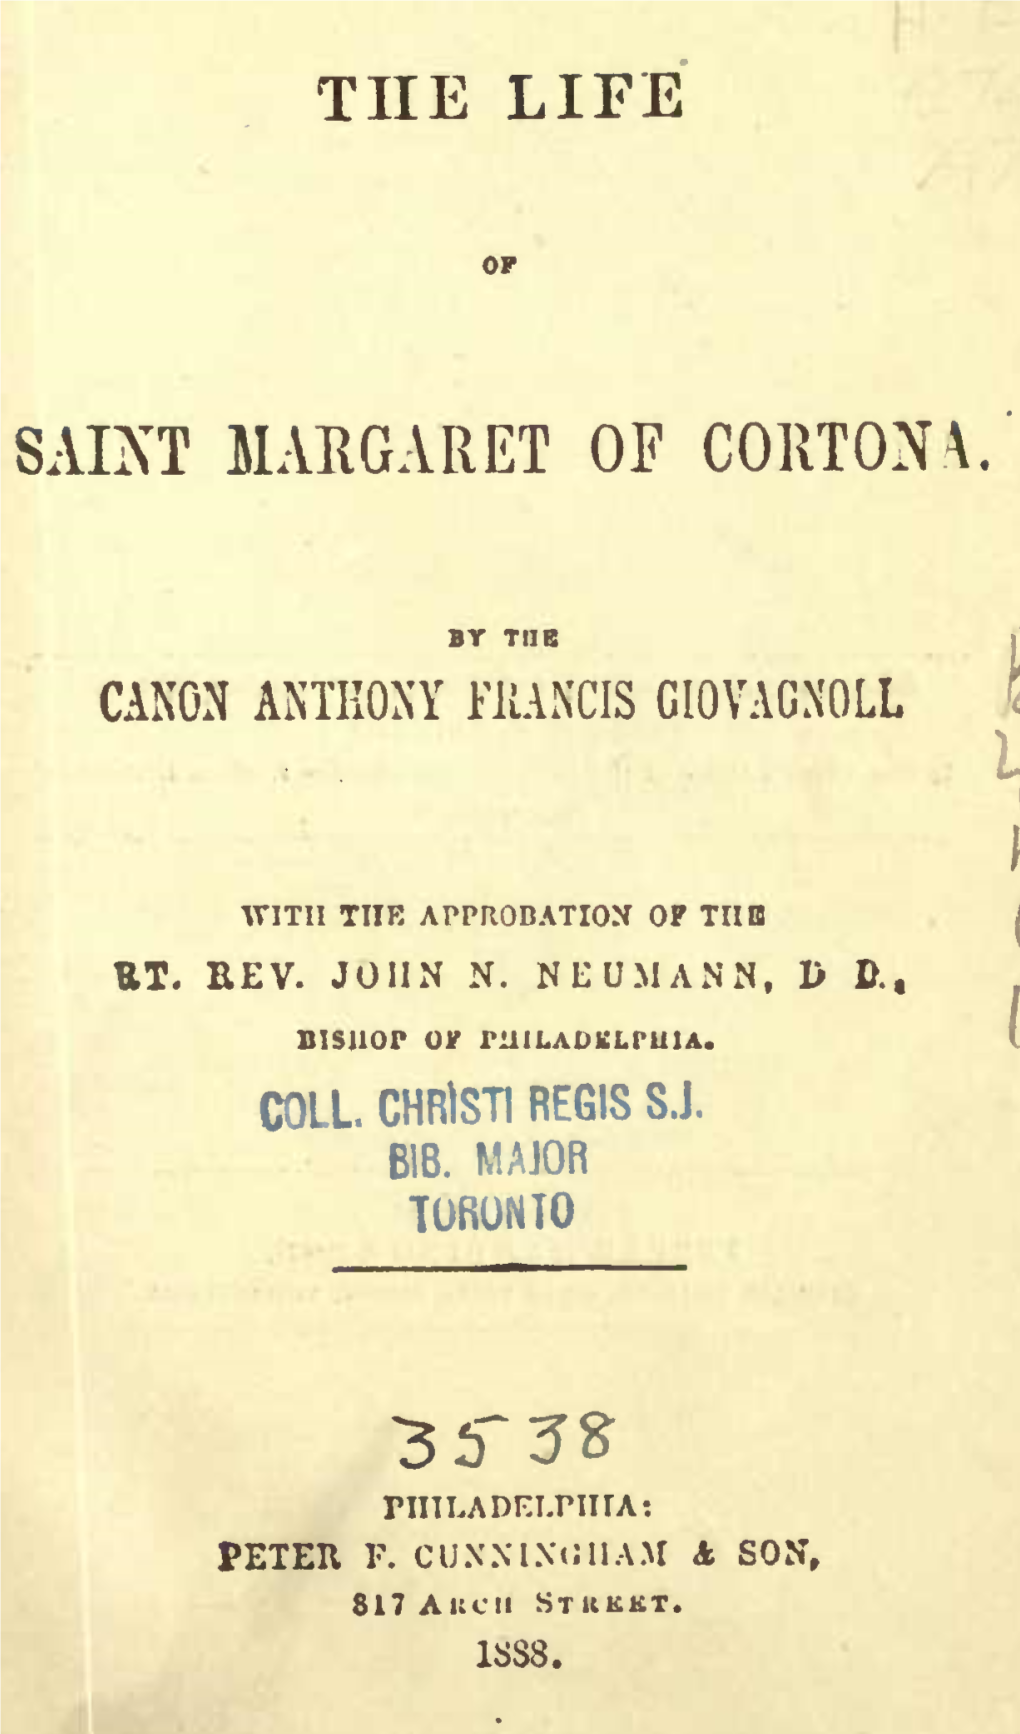 The Life of St. Margaret of Cortona